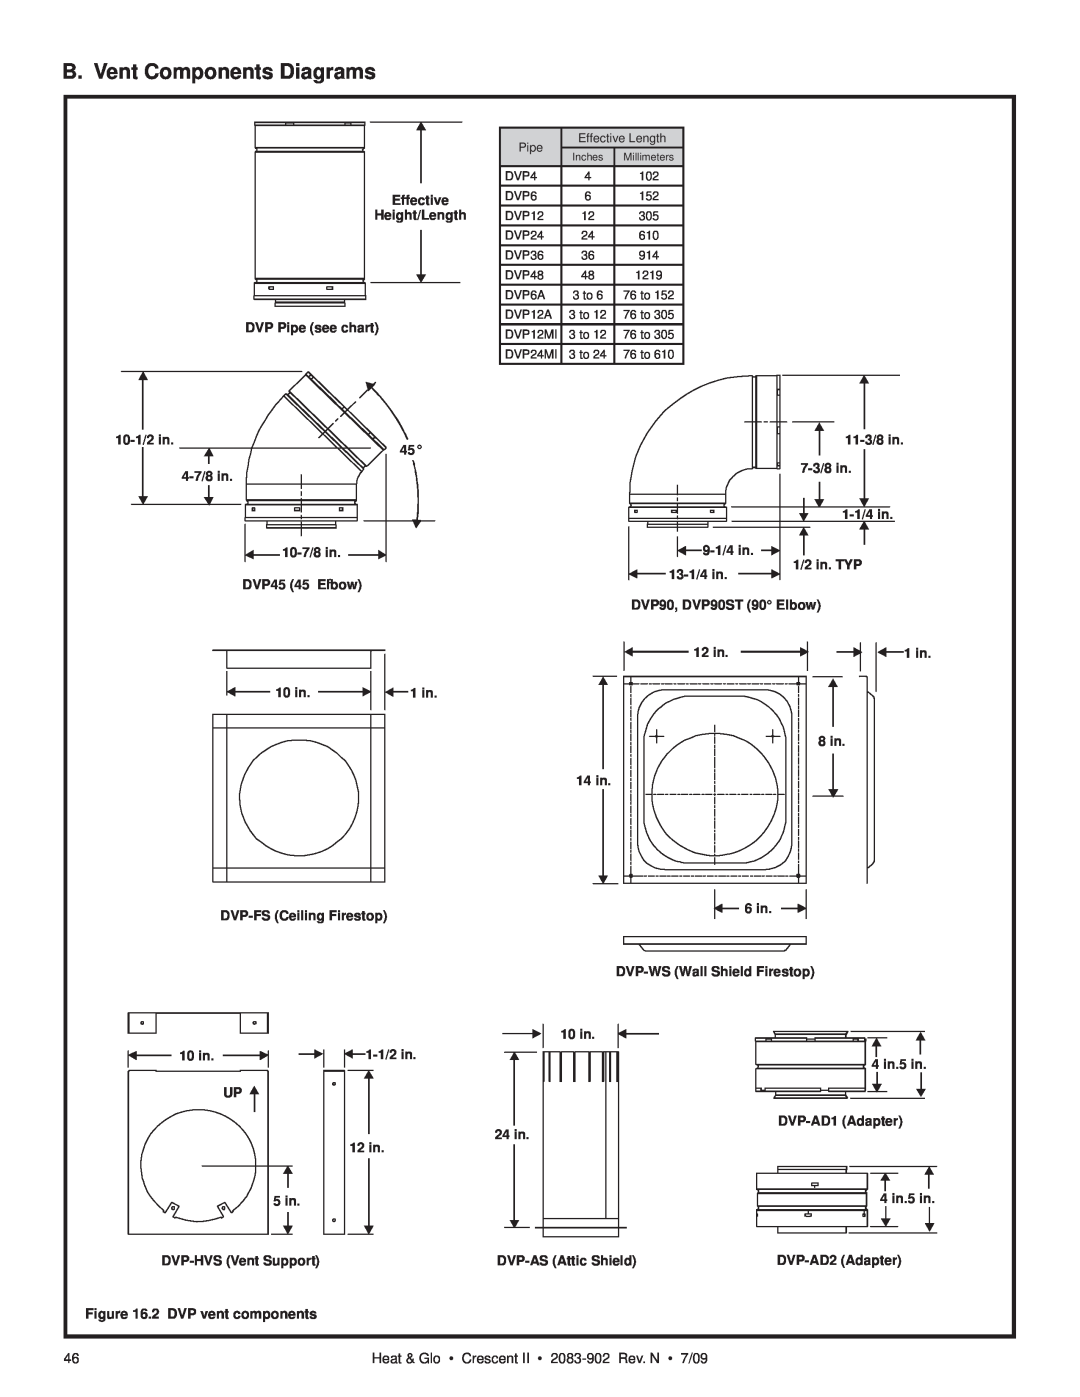 Heat & Glo LifeStyle CRESCENT II B. Vent Components Diagrams, 2 DVP vent components, Heat & Glo, Crescent, Rev. N, 7/09 